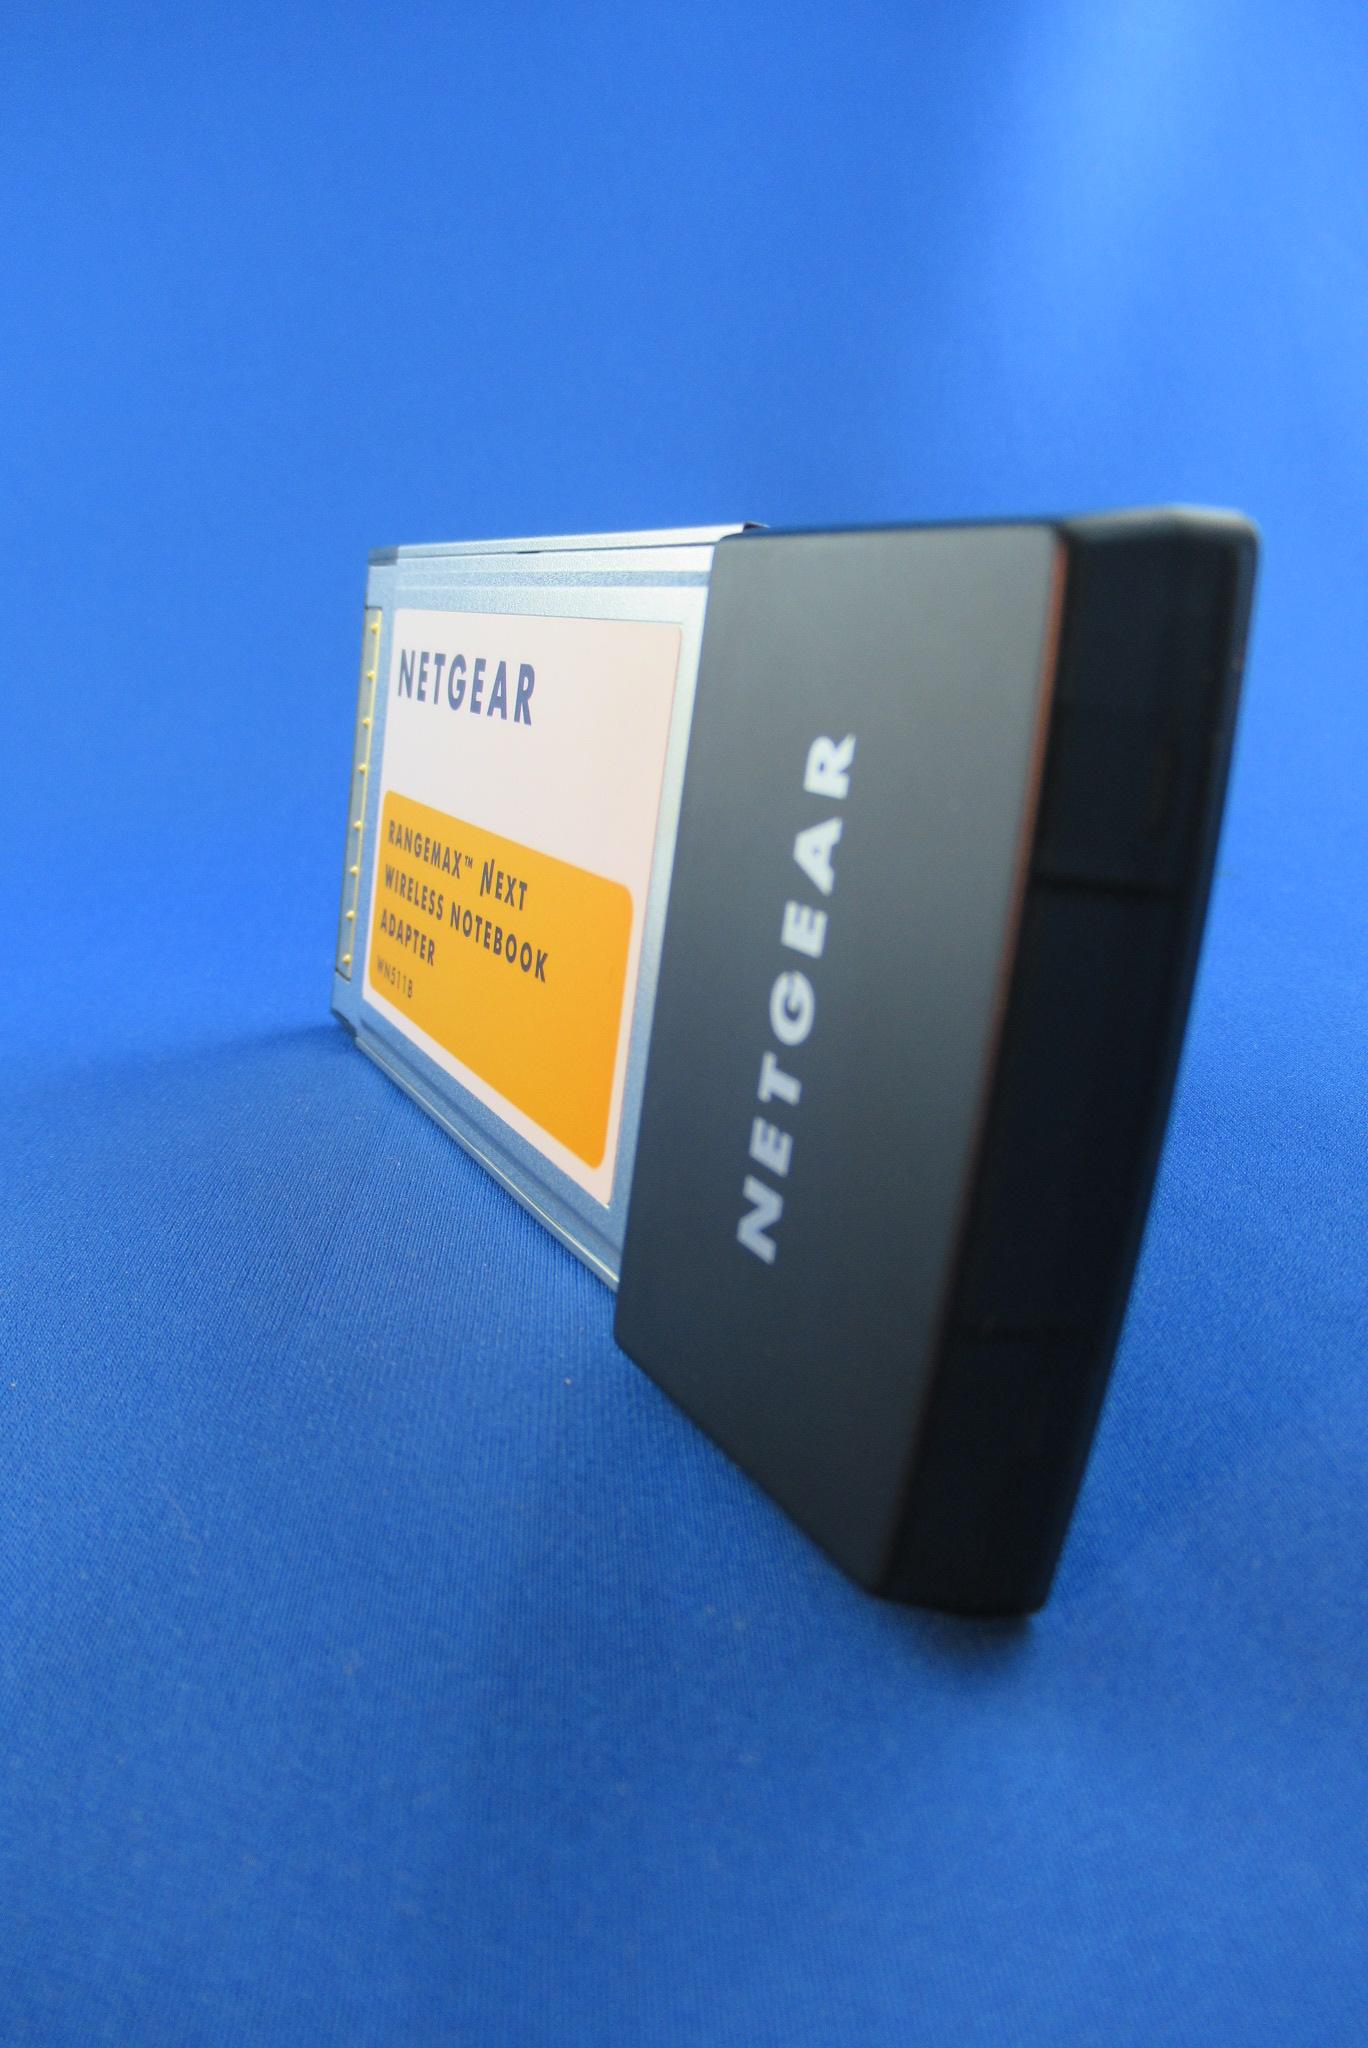 WLAN PC-Card 270 MB NETGEAR WN511B-100GRS